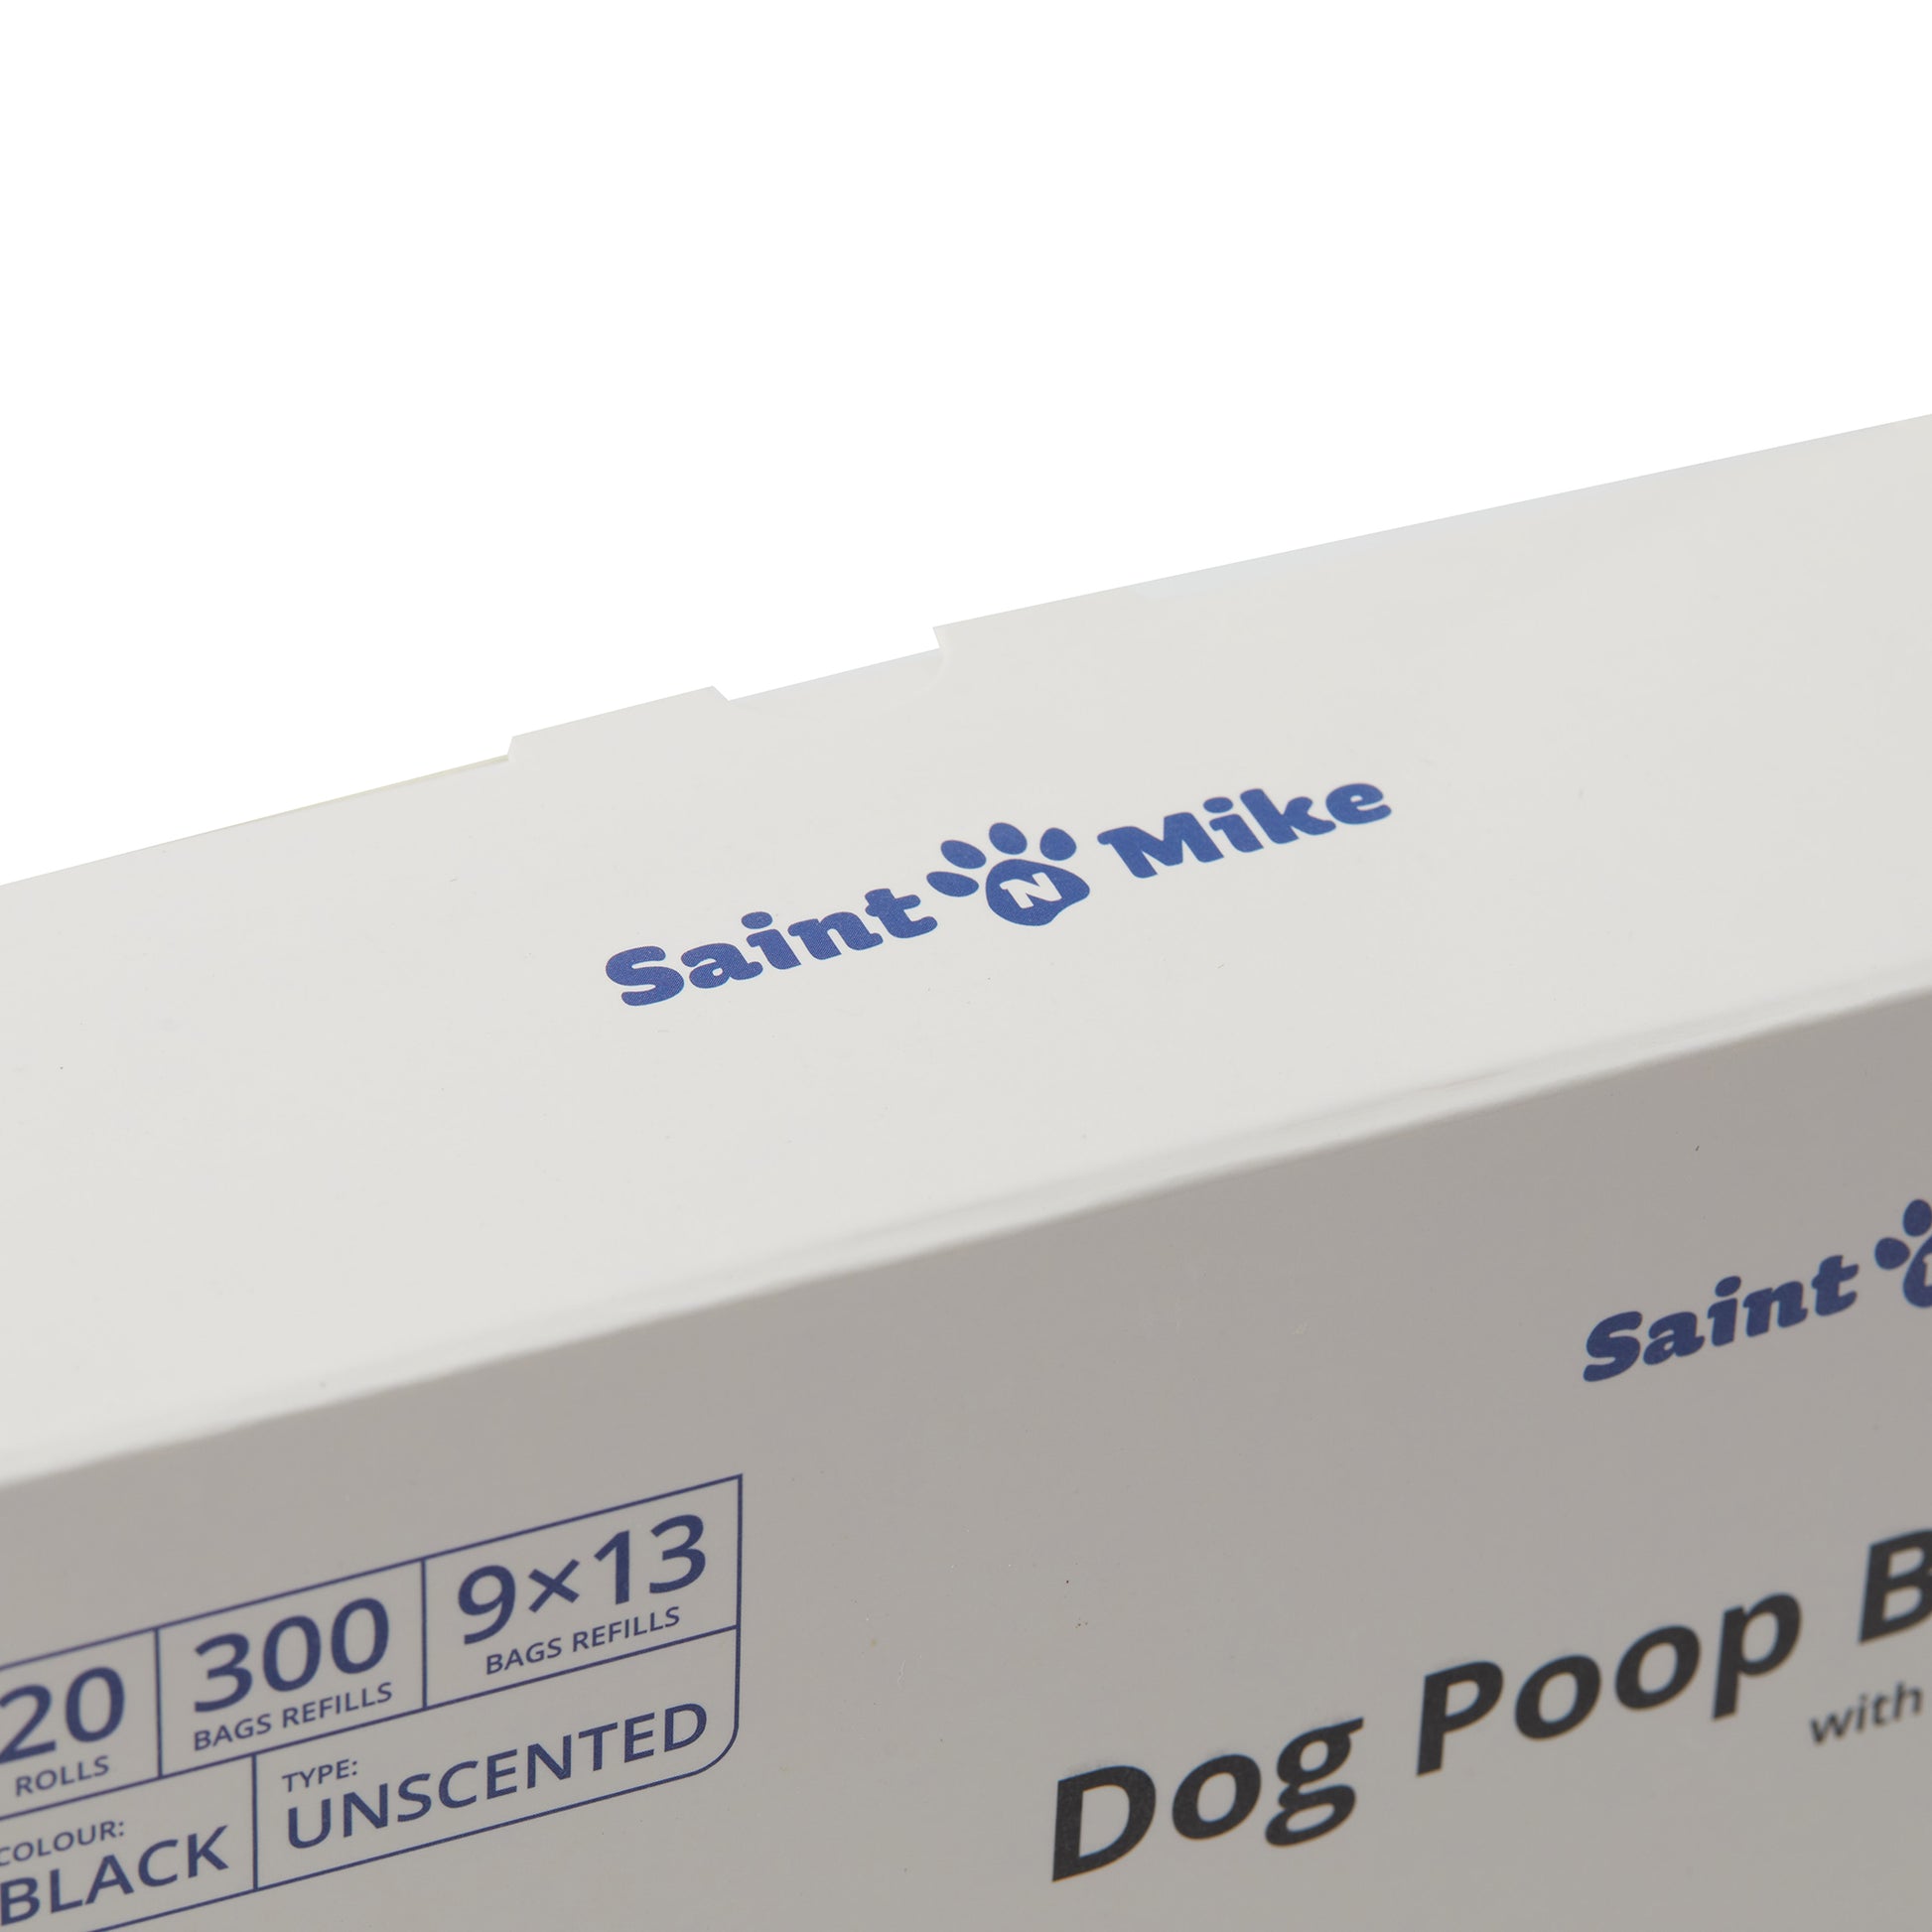 essentials dog poop bags with waste bag dispenser, 300 count, 20 pack of 15, black14